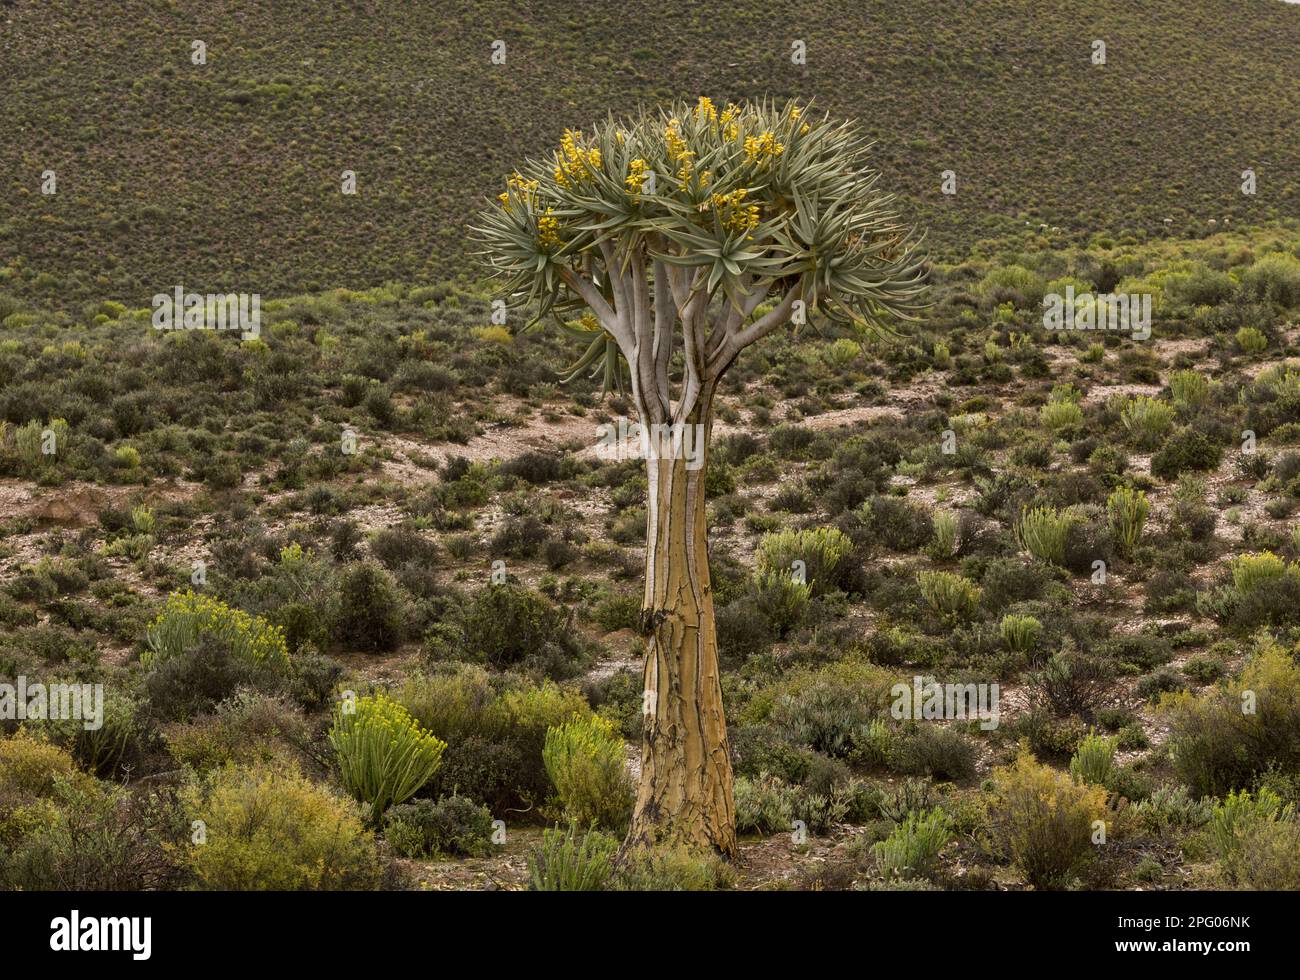 Kokerboom (Aloe dichotoma) abitudine, fiorendo in habitat deserto, Namaqua N. P. Namaqualand, Sudafrica Foto Stock